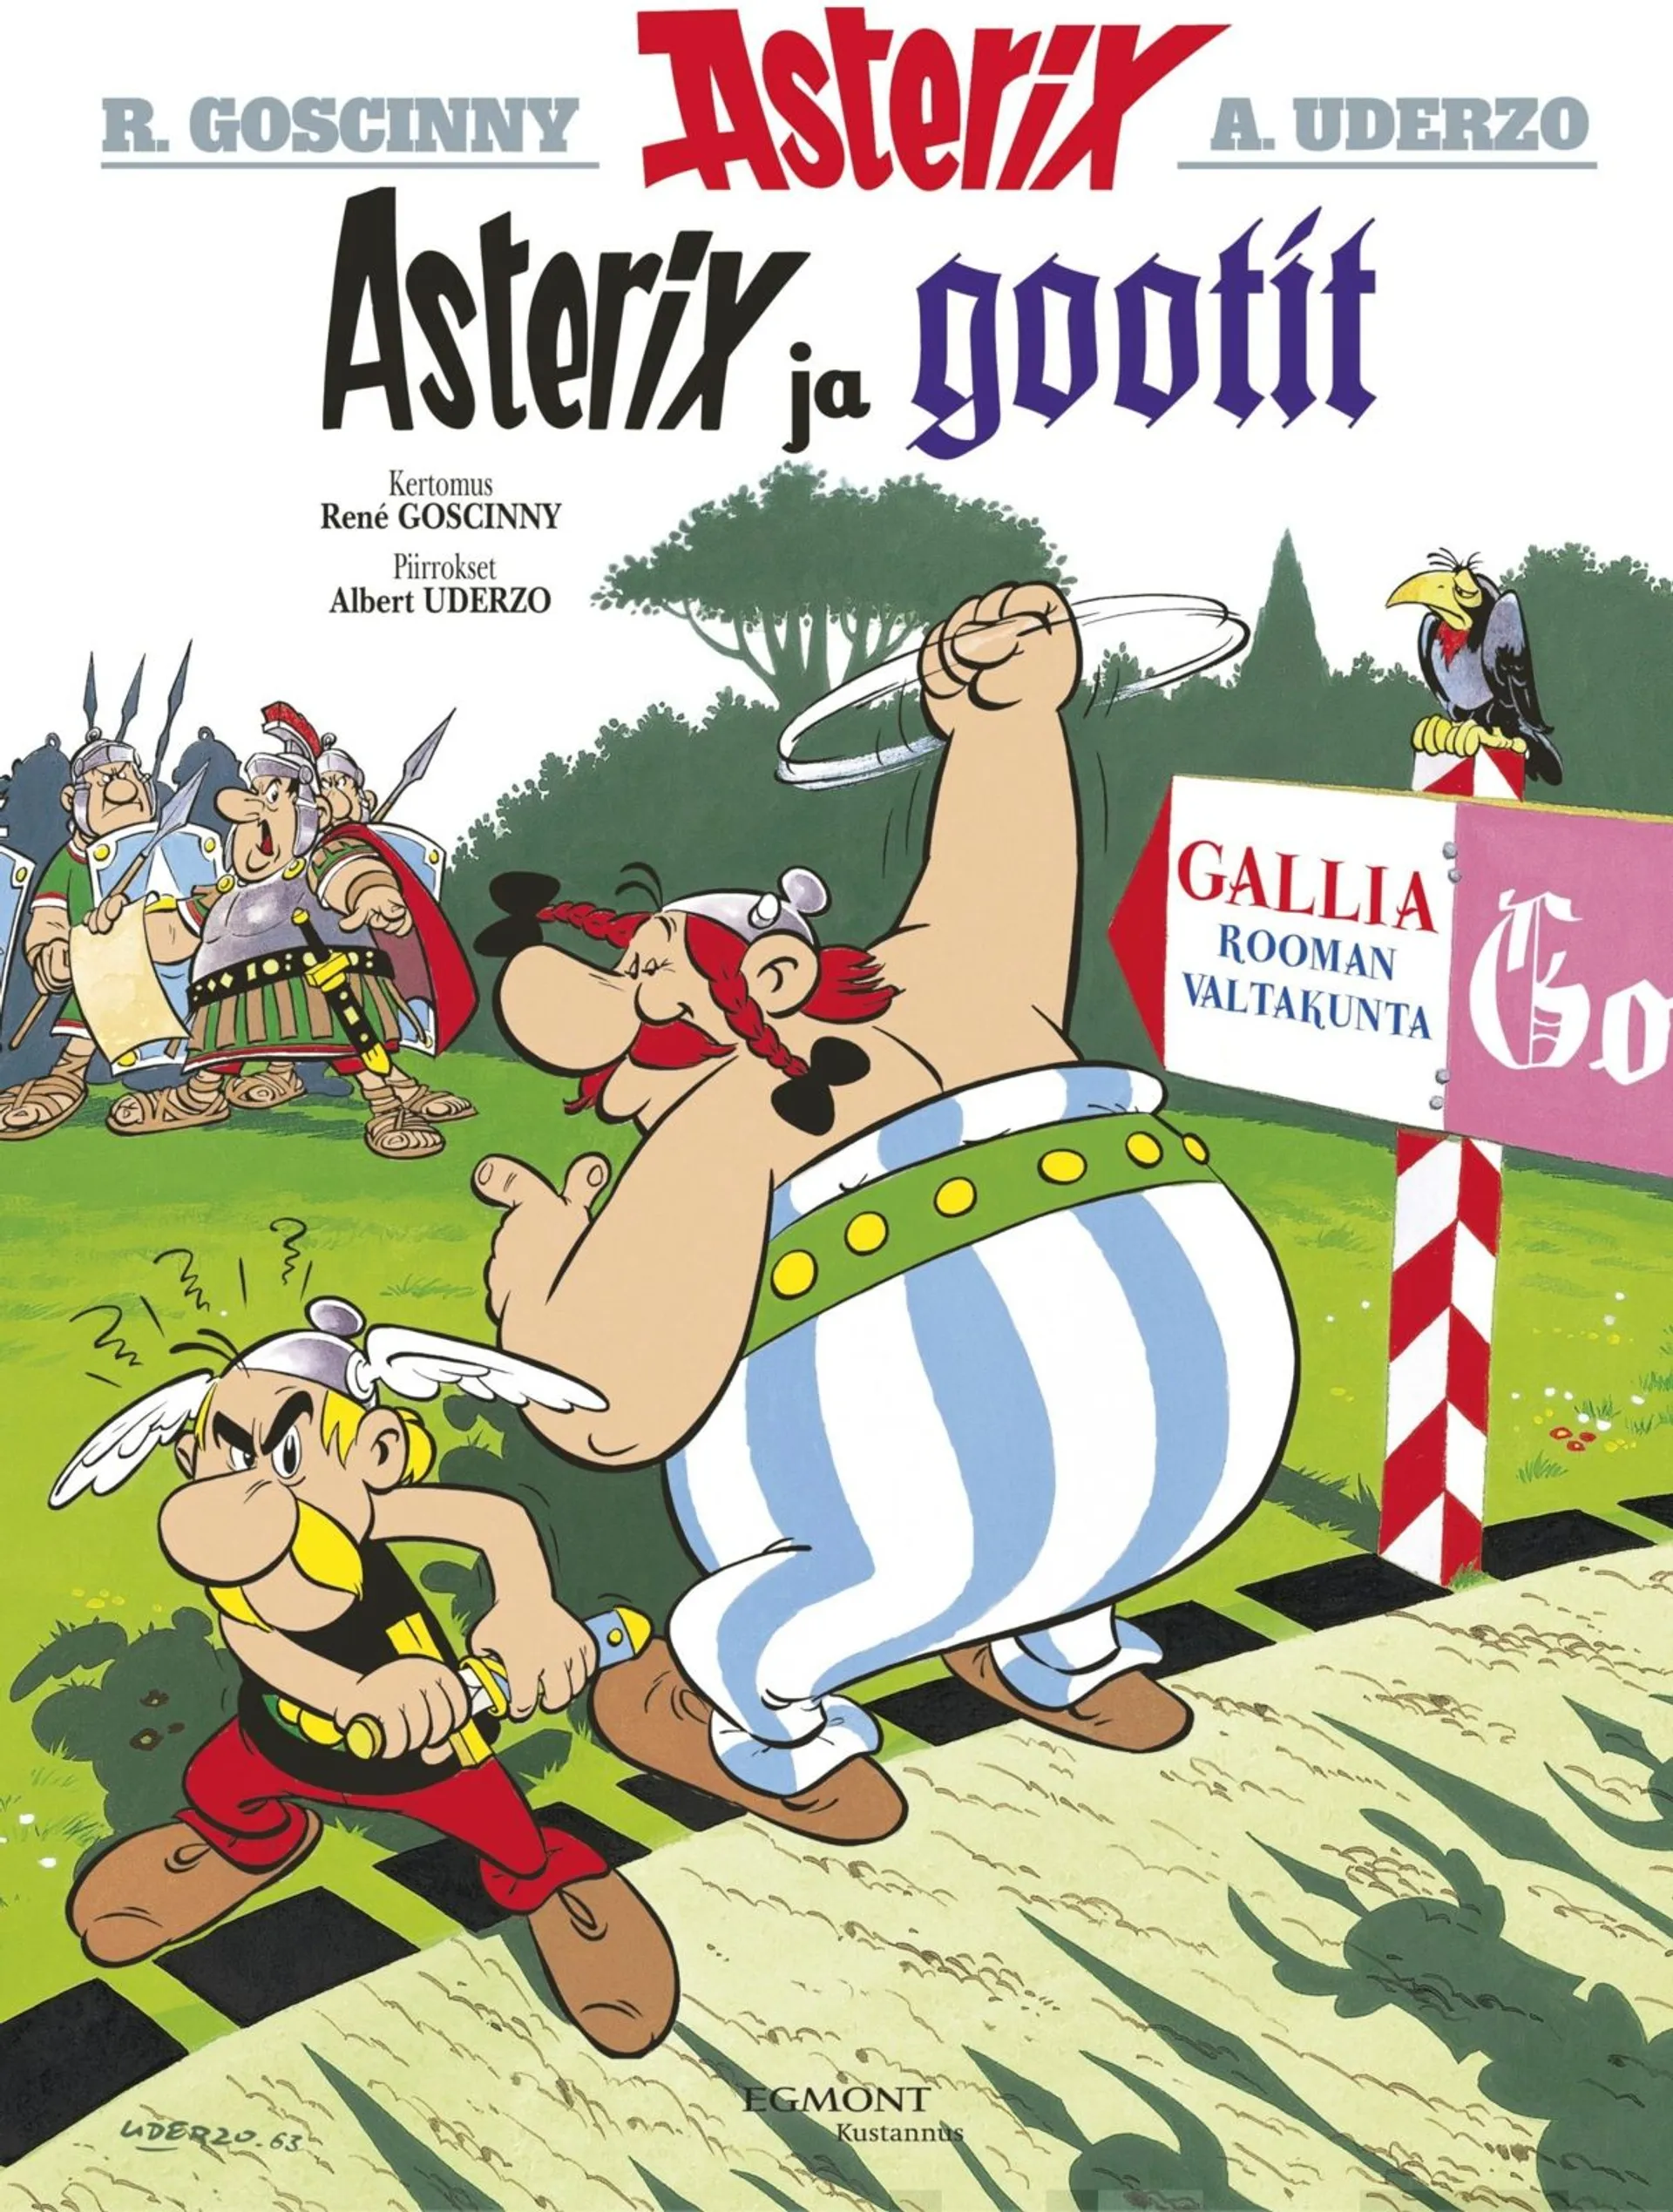 Goscinny, Asterix 3: Asterix ja gootit